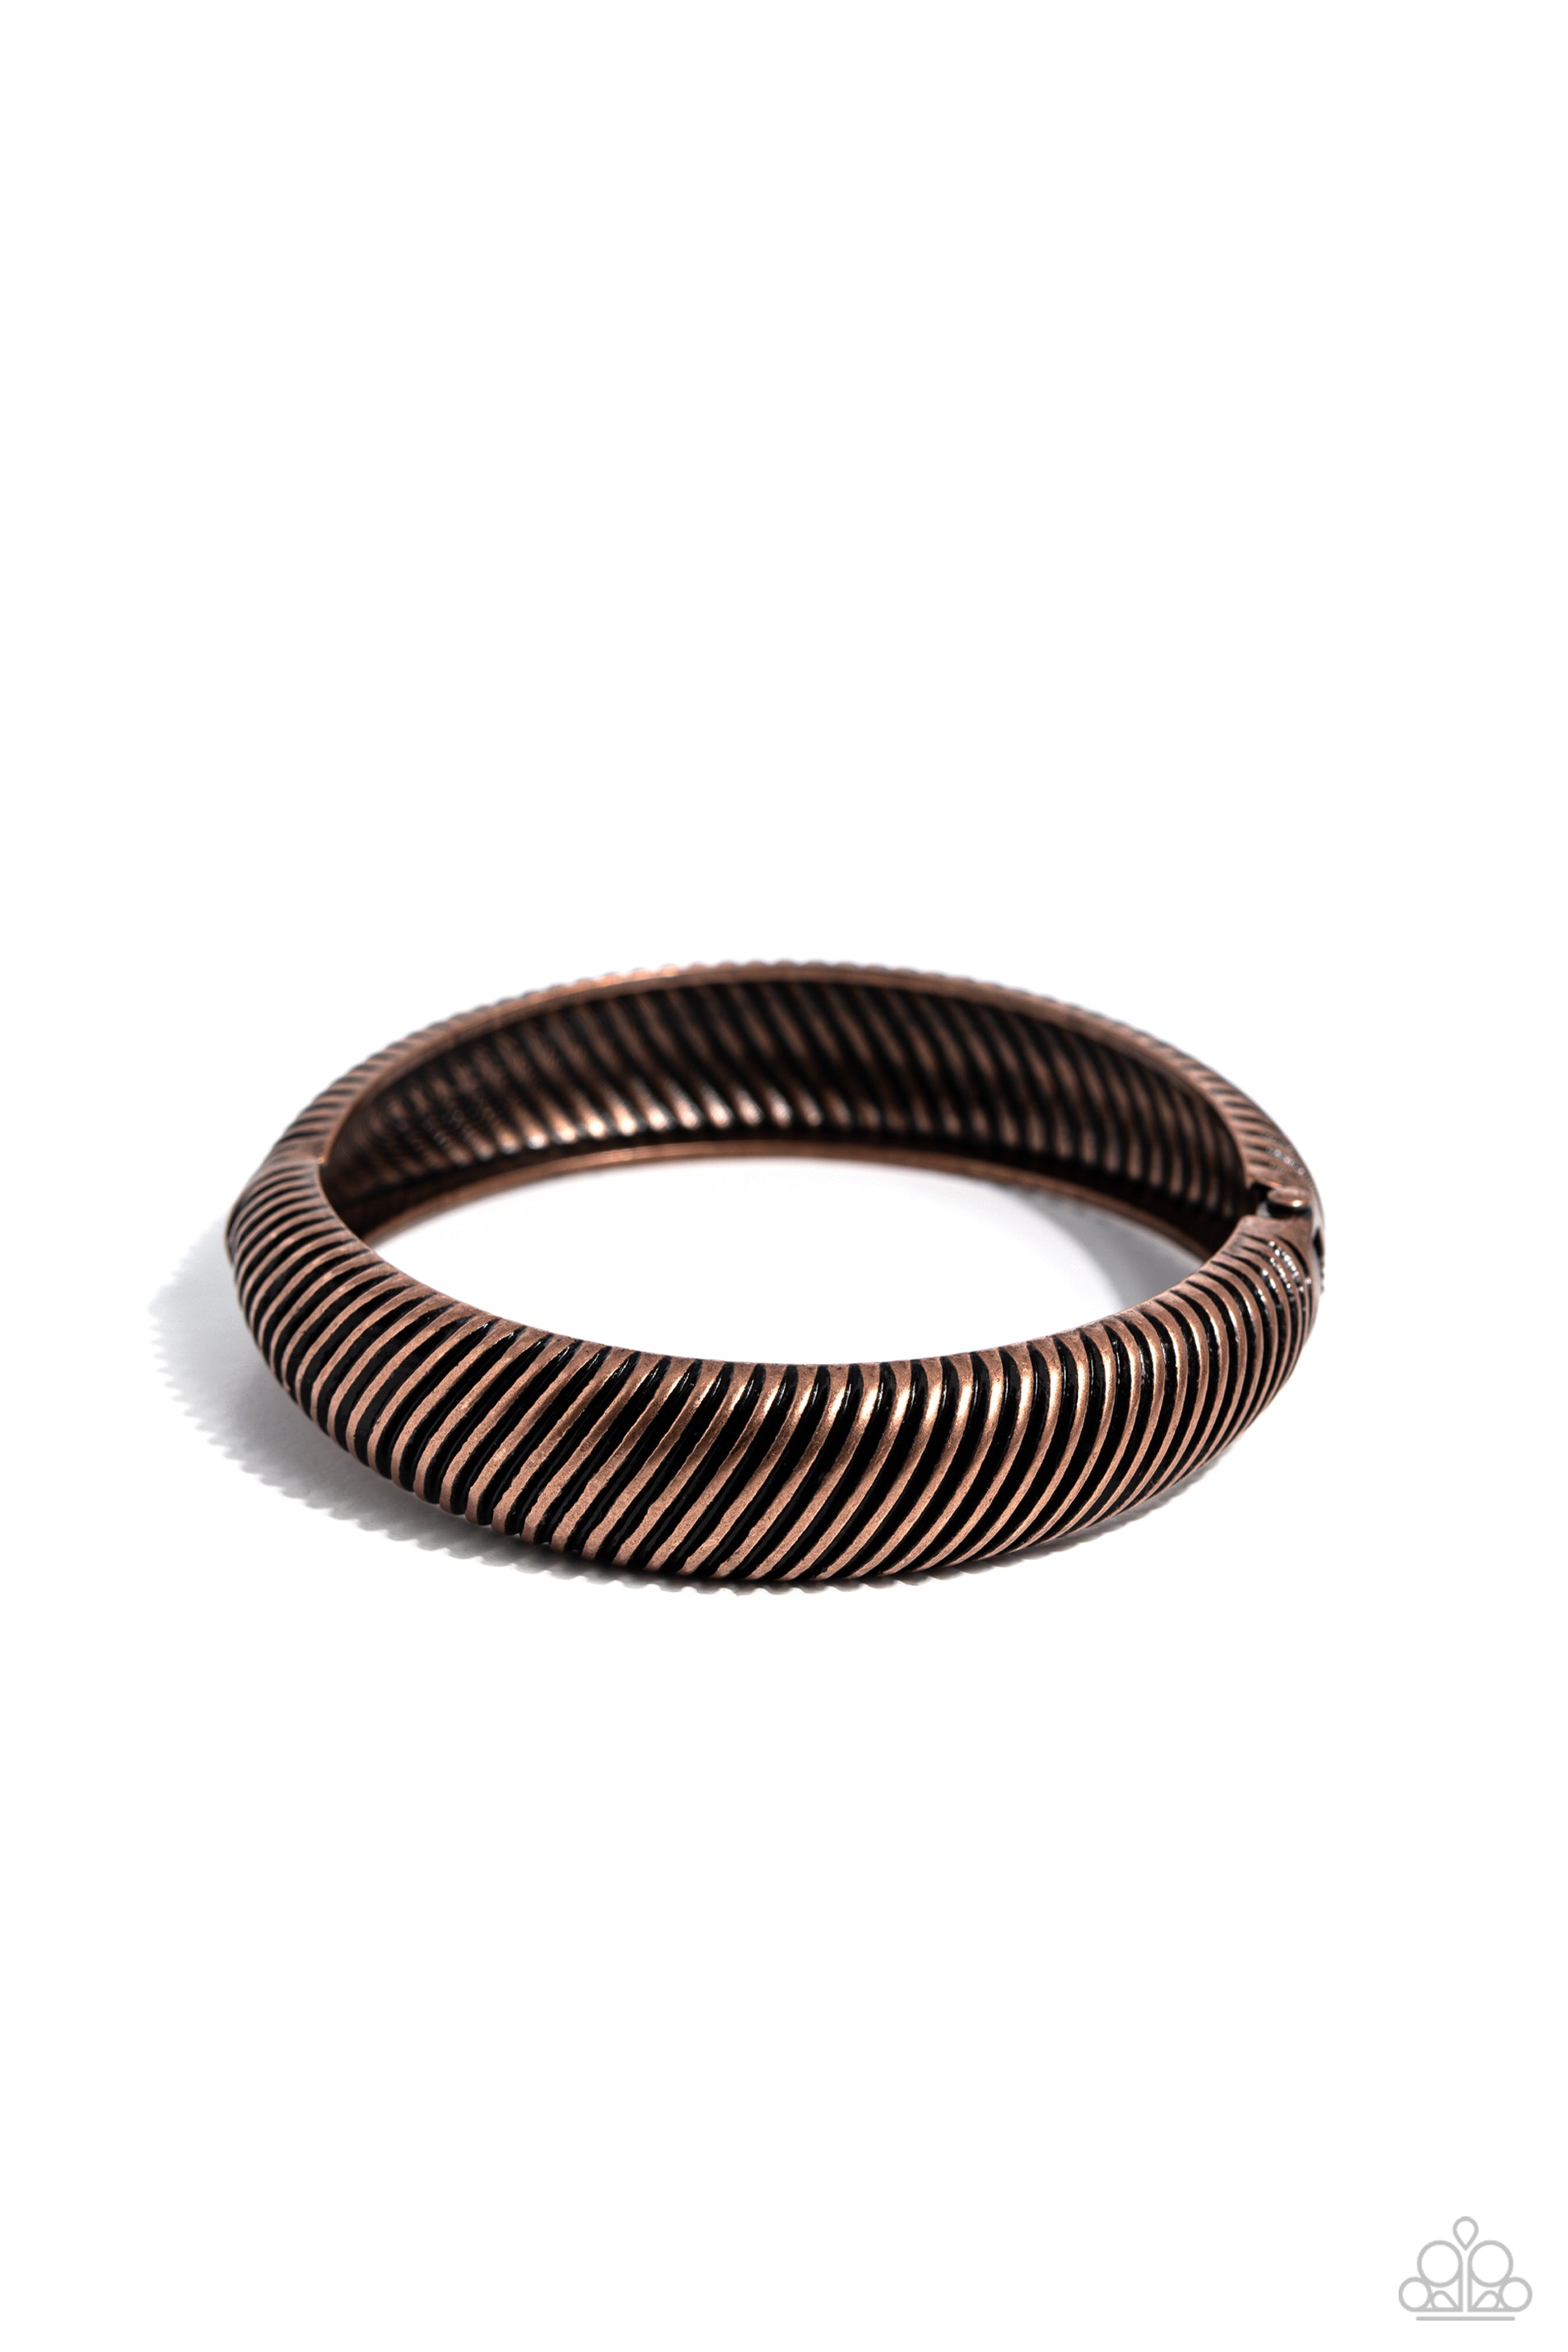 Jailhouse Jive - copper - Paparazzi bracelet